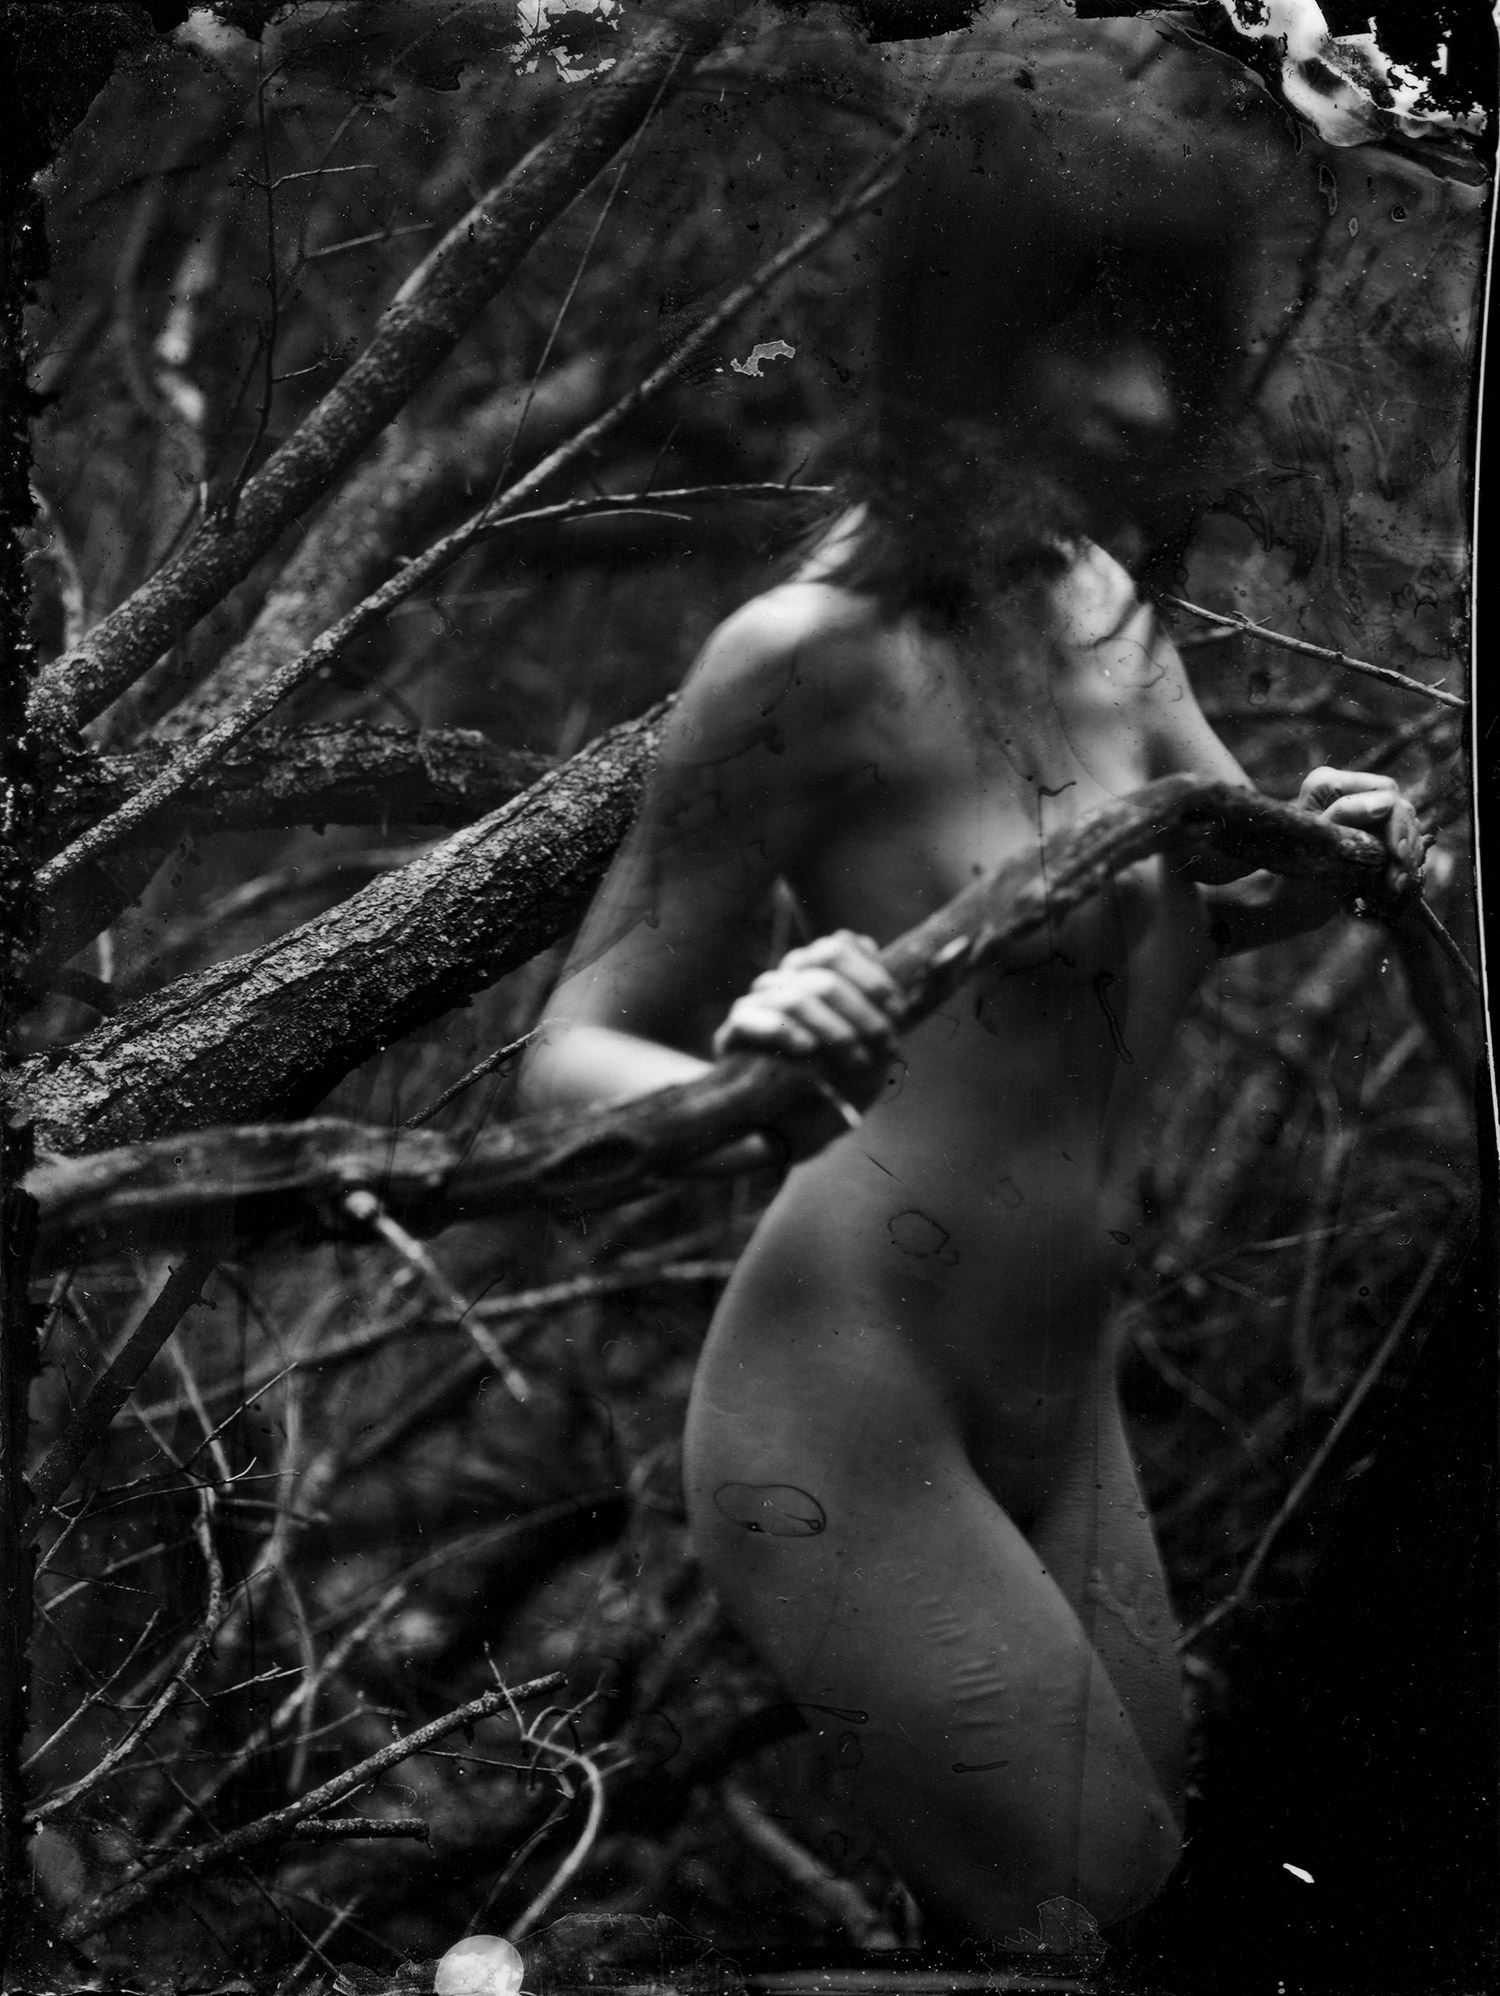 Rik Garrett, Earth Magic - nude woman in forest holding branch